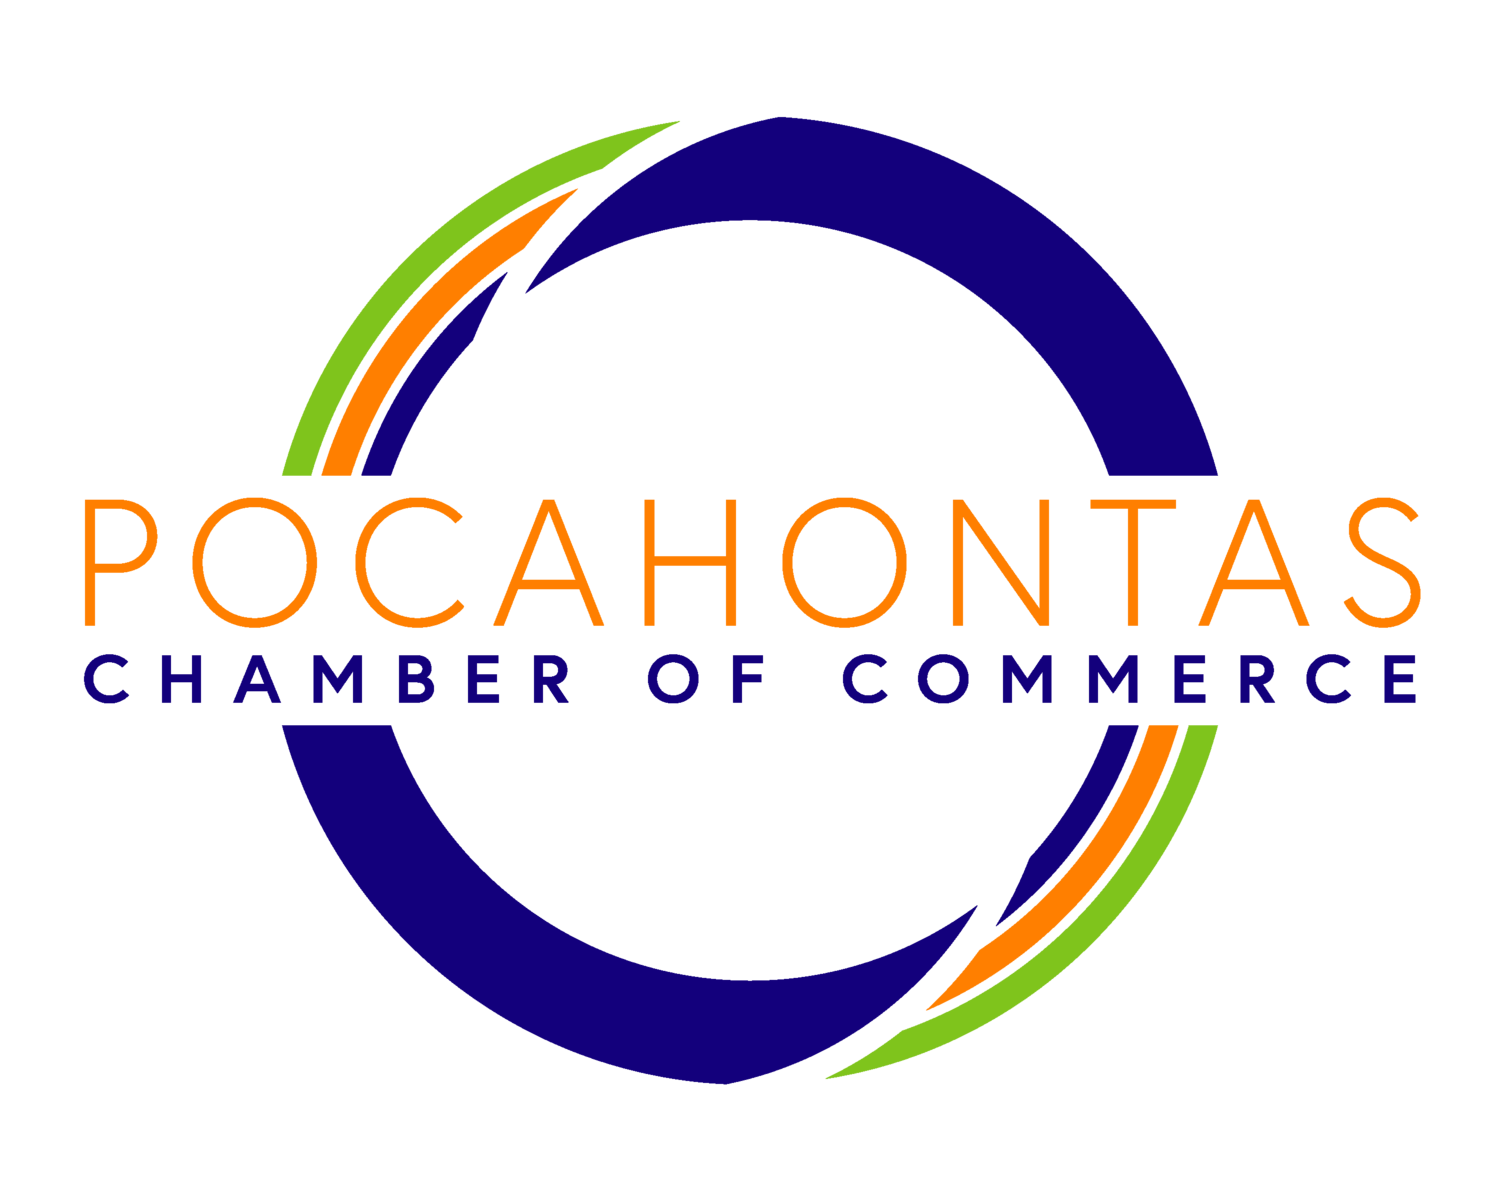 Pocahontas, IA - Chamber of Commerce